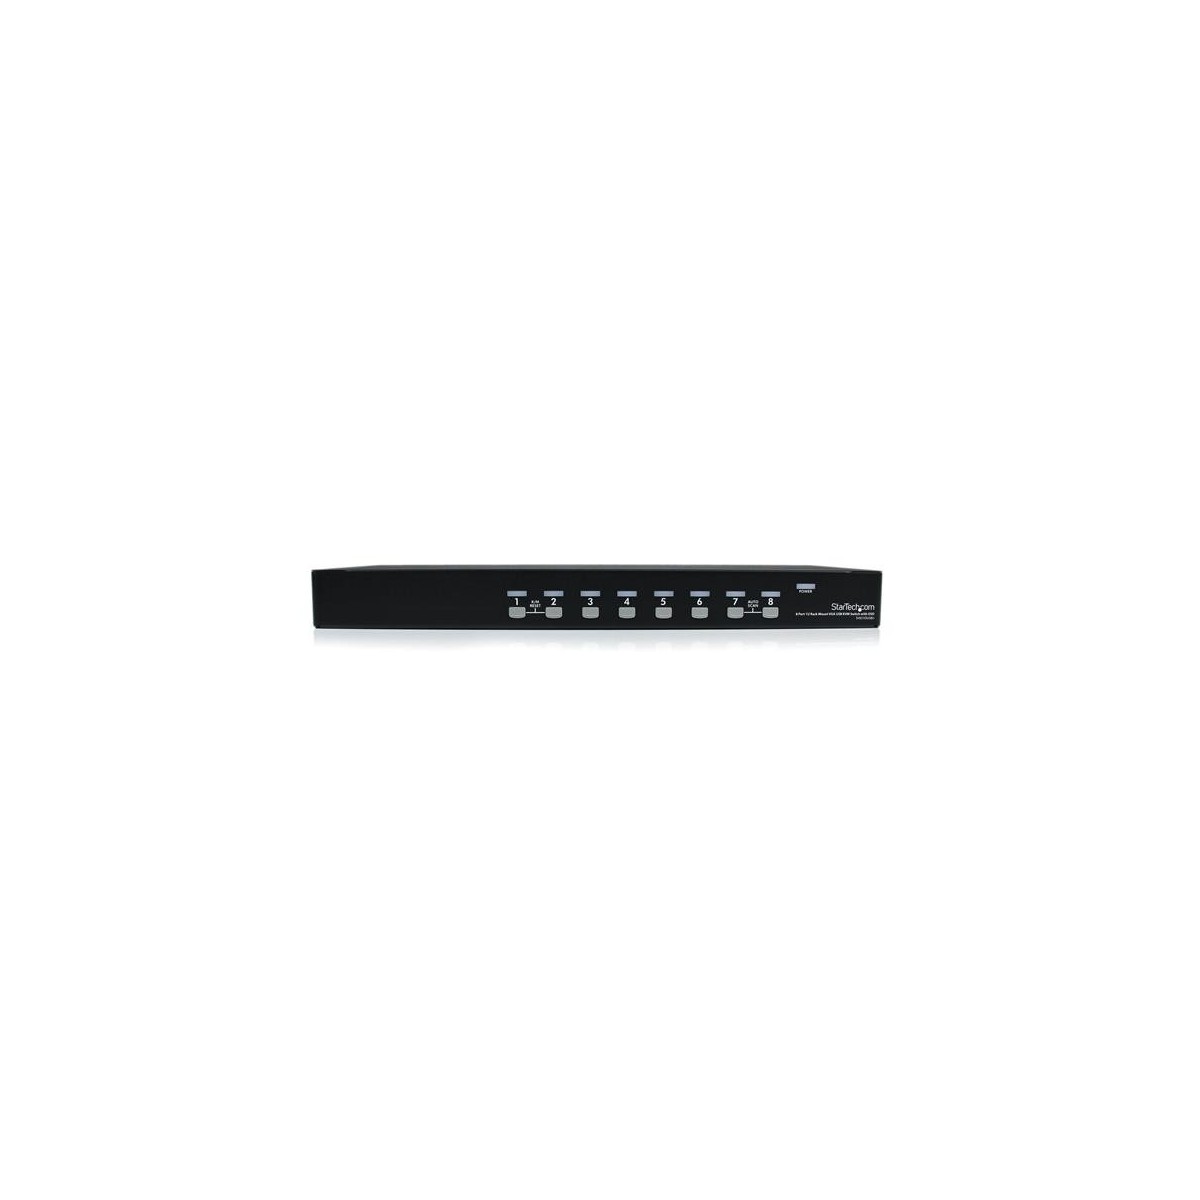 StarTech.com 8 Port 1U Rackmount USB KVM Switch with OSD - 1920 x 1440 pixels - Rack mounting - 1U - Black